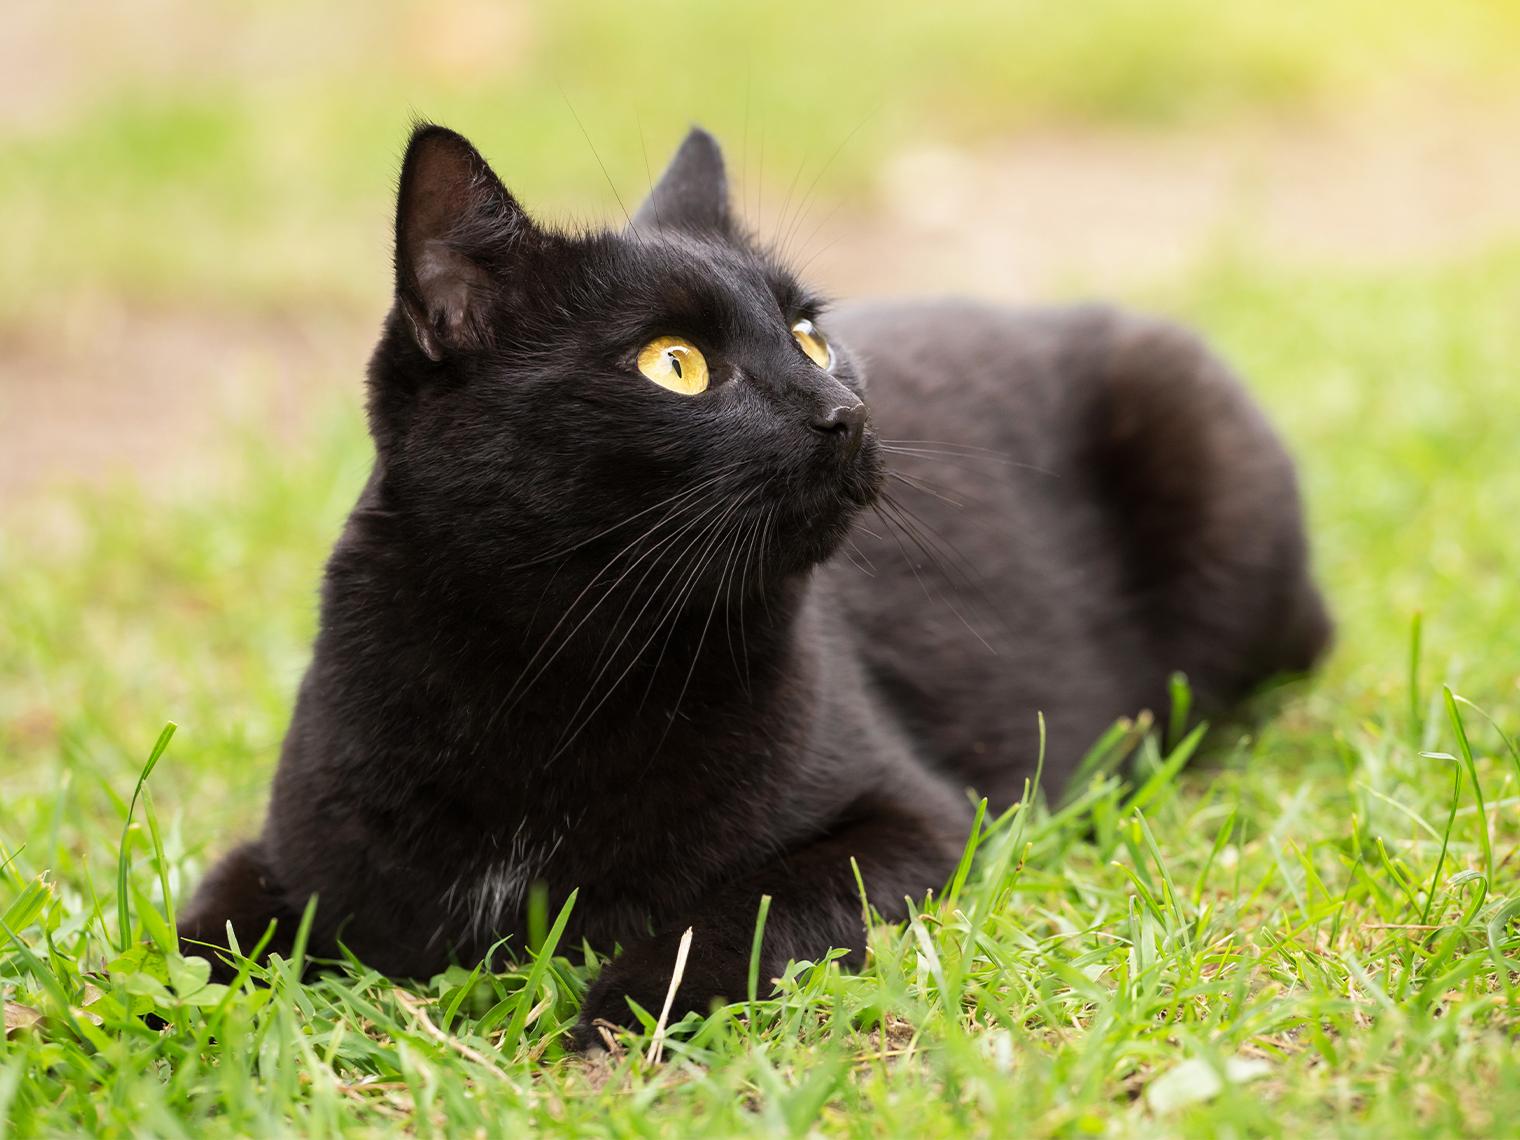 Bombay cat in grass